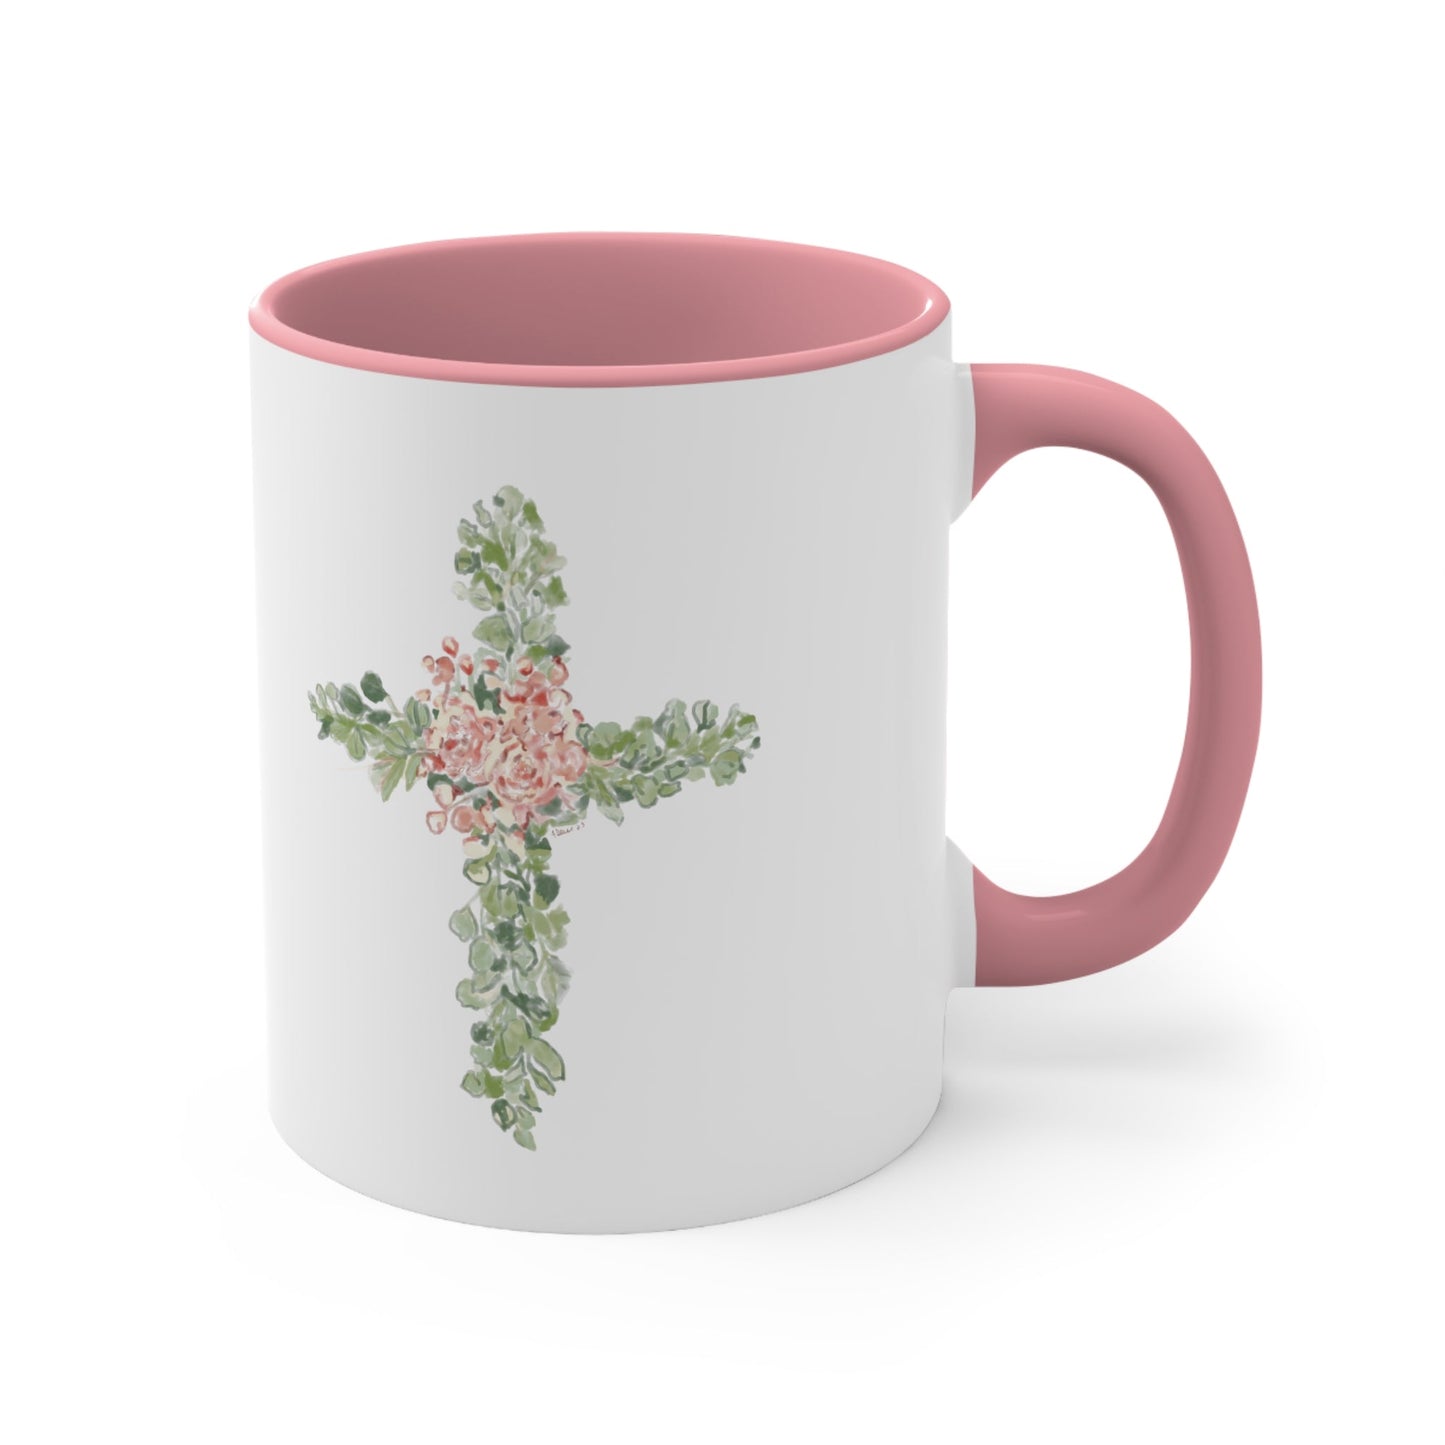 Floral Cross Coffee Mug, 11oz - Blue Cava